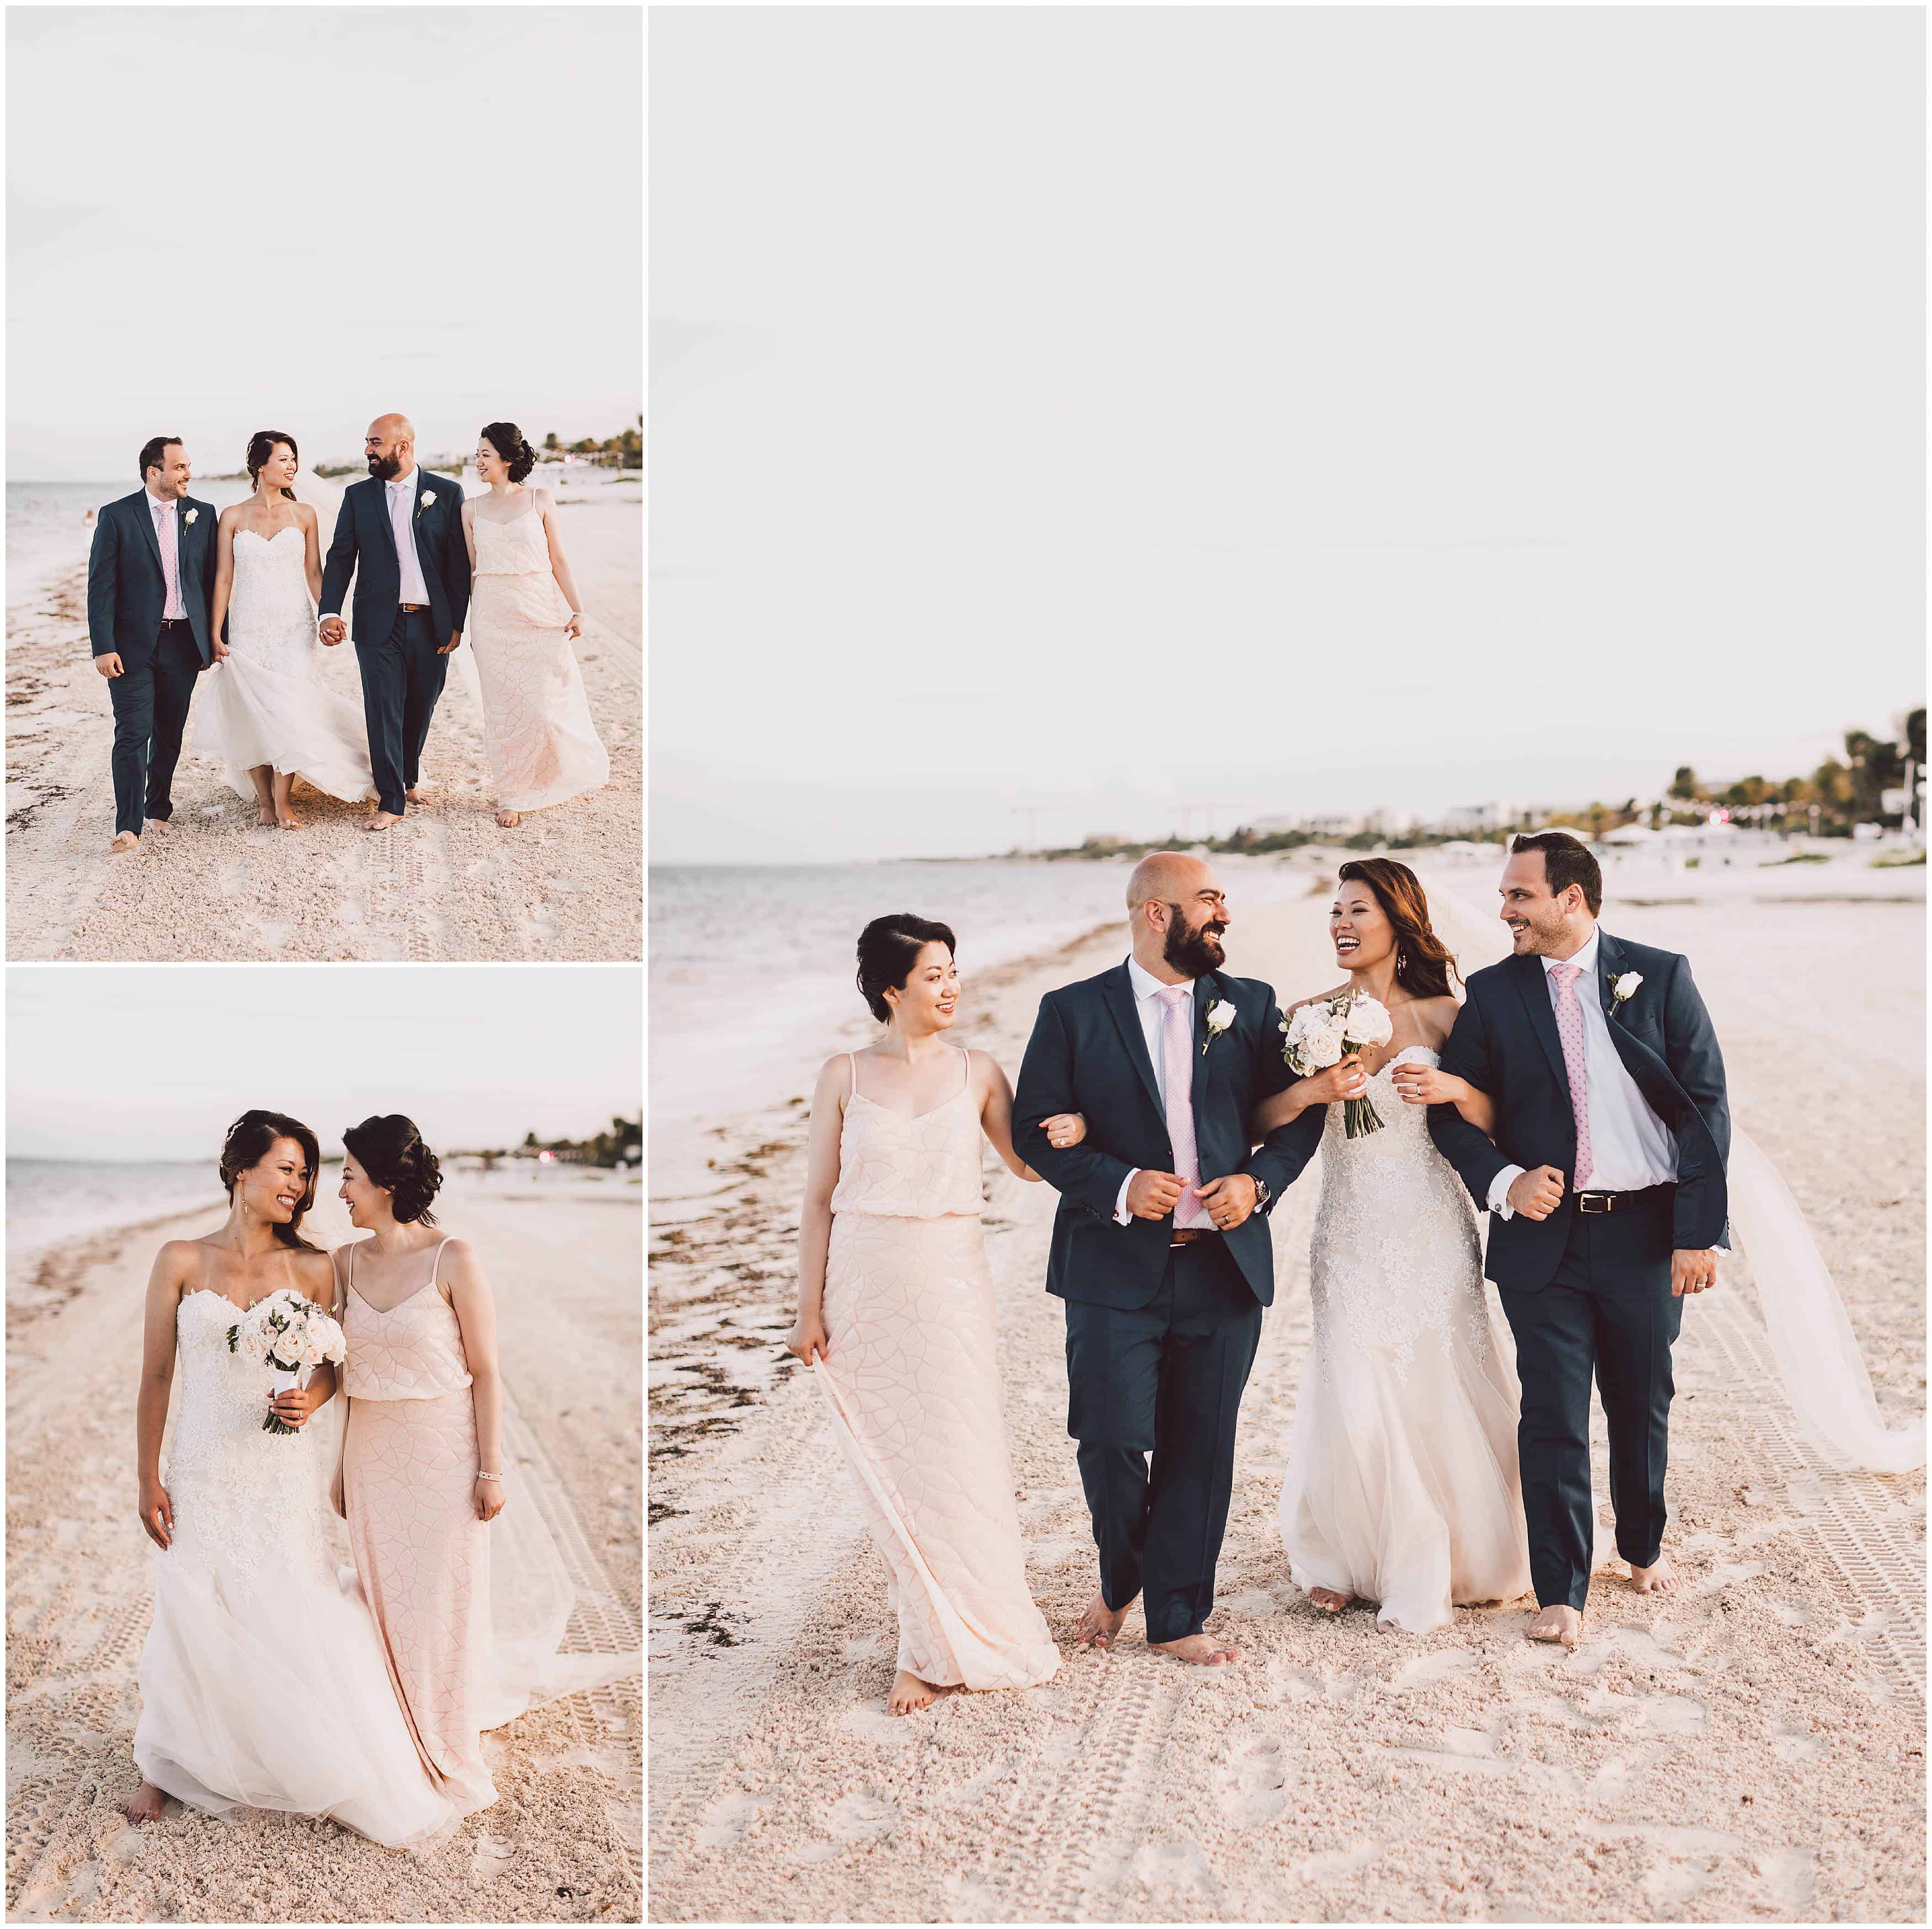 Cancun beach wedding photos